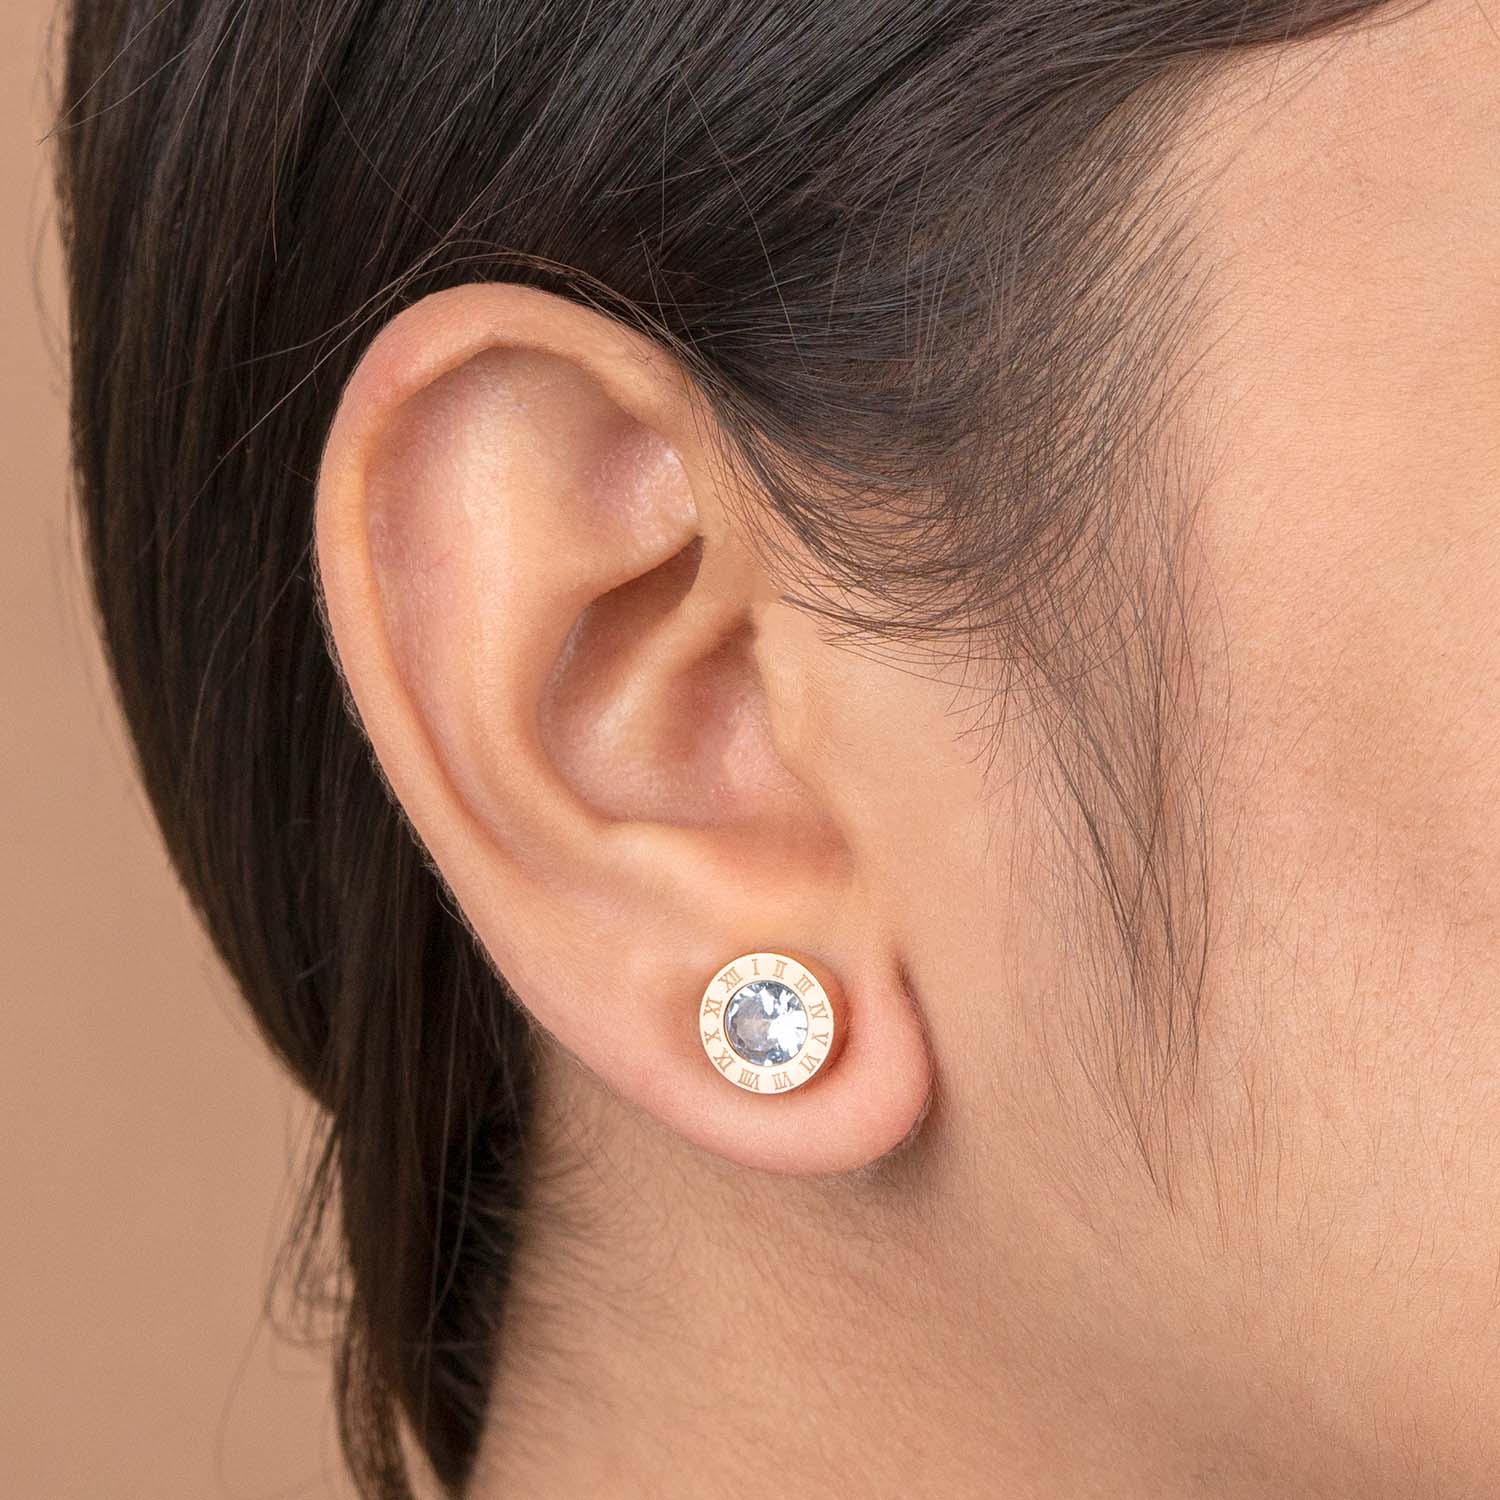 W Premium Jewellery Dainty Everyday Earring Combo